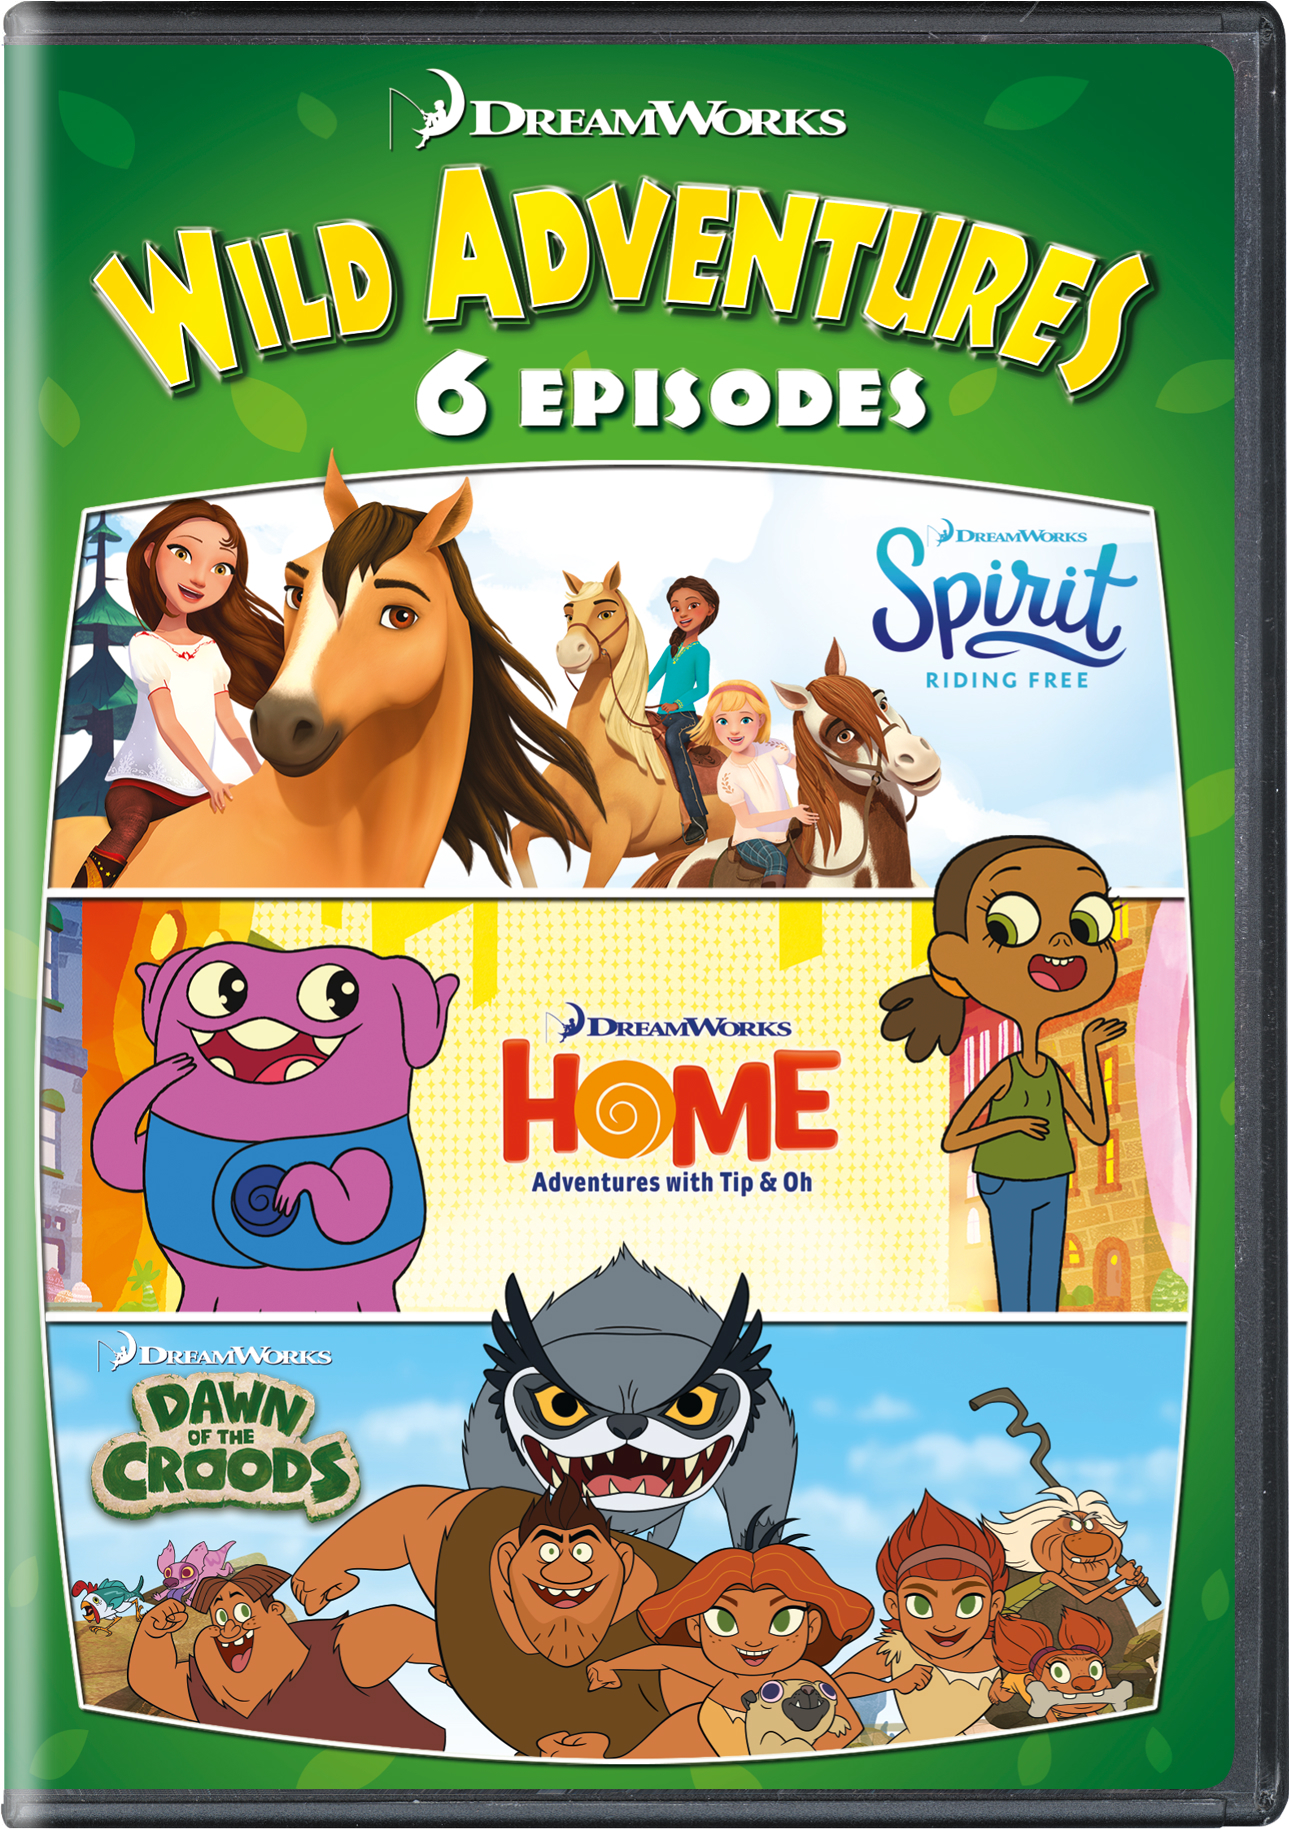 DreamWorks 6 Wild Adventures - DVD   - Animation Movies On DVD - Movies On GRUV